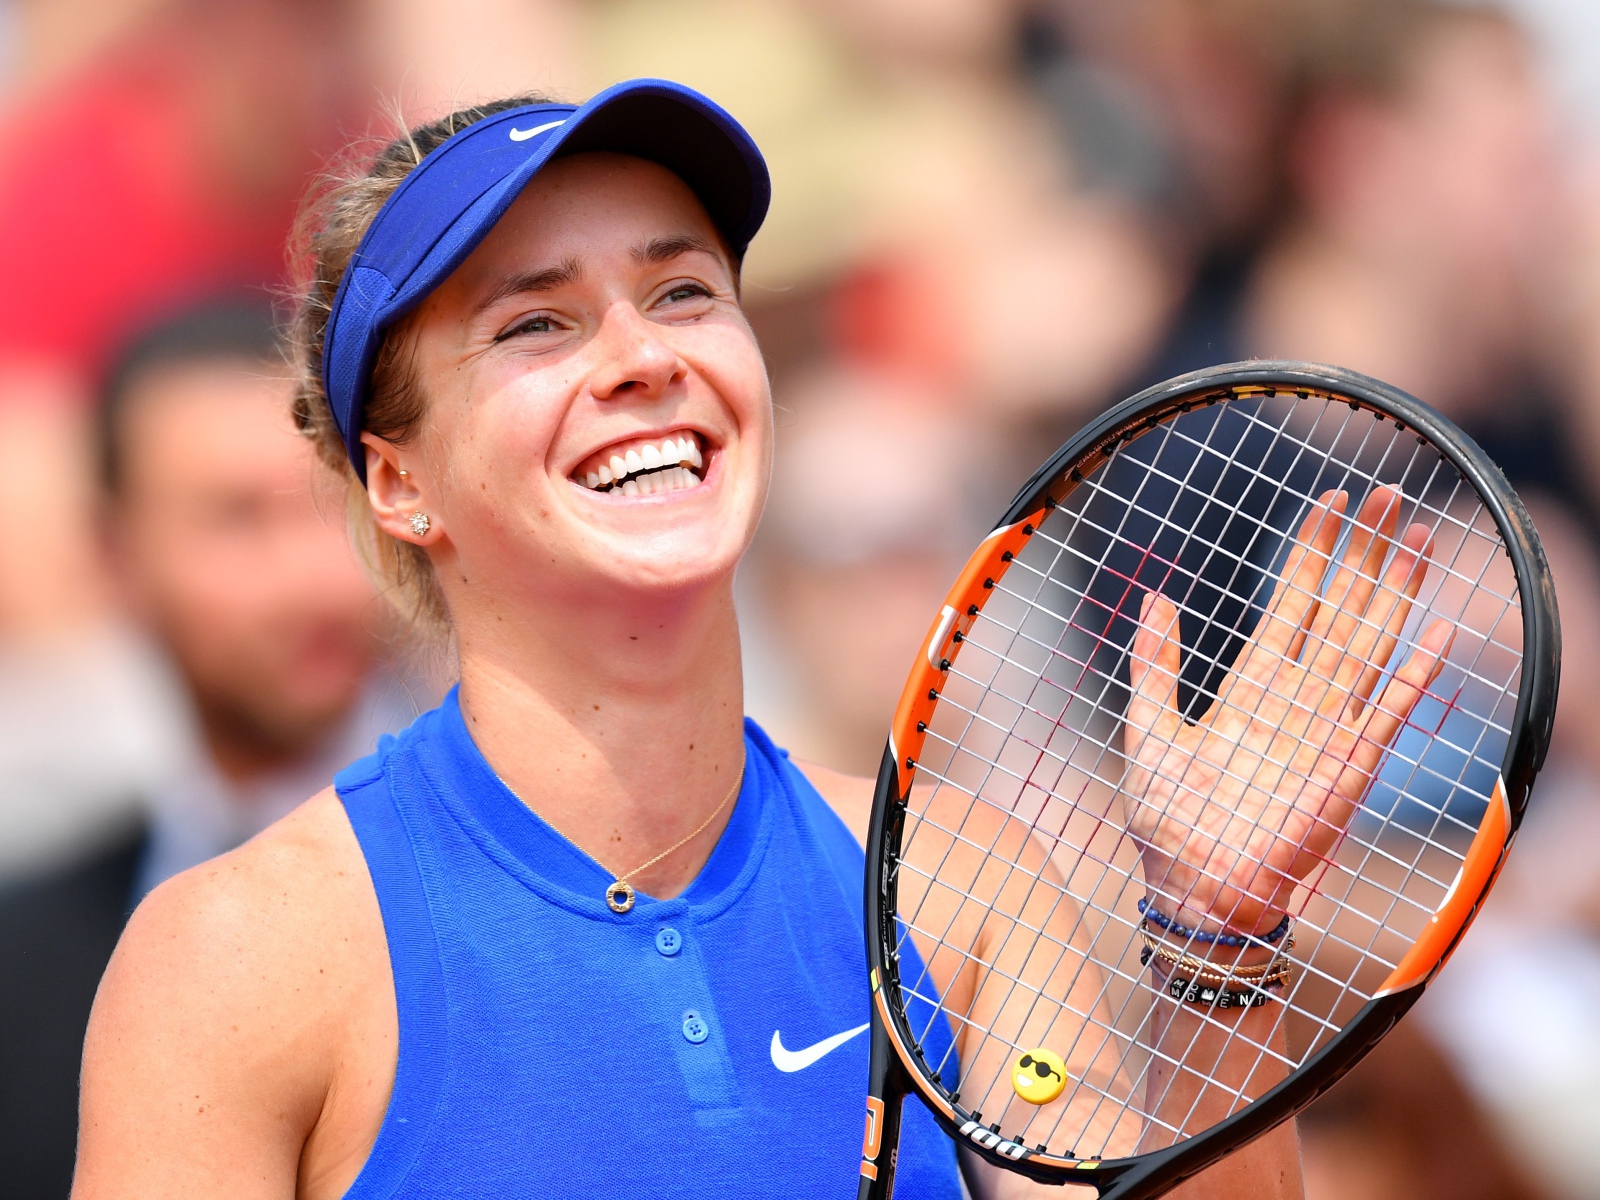 Ukrainian tennis player Elina Svitolina smiles on court